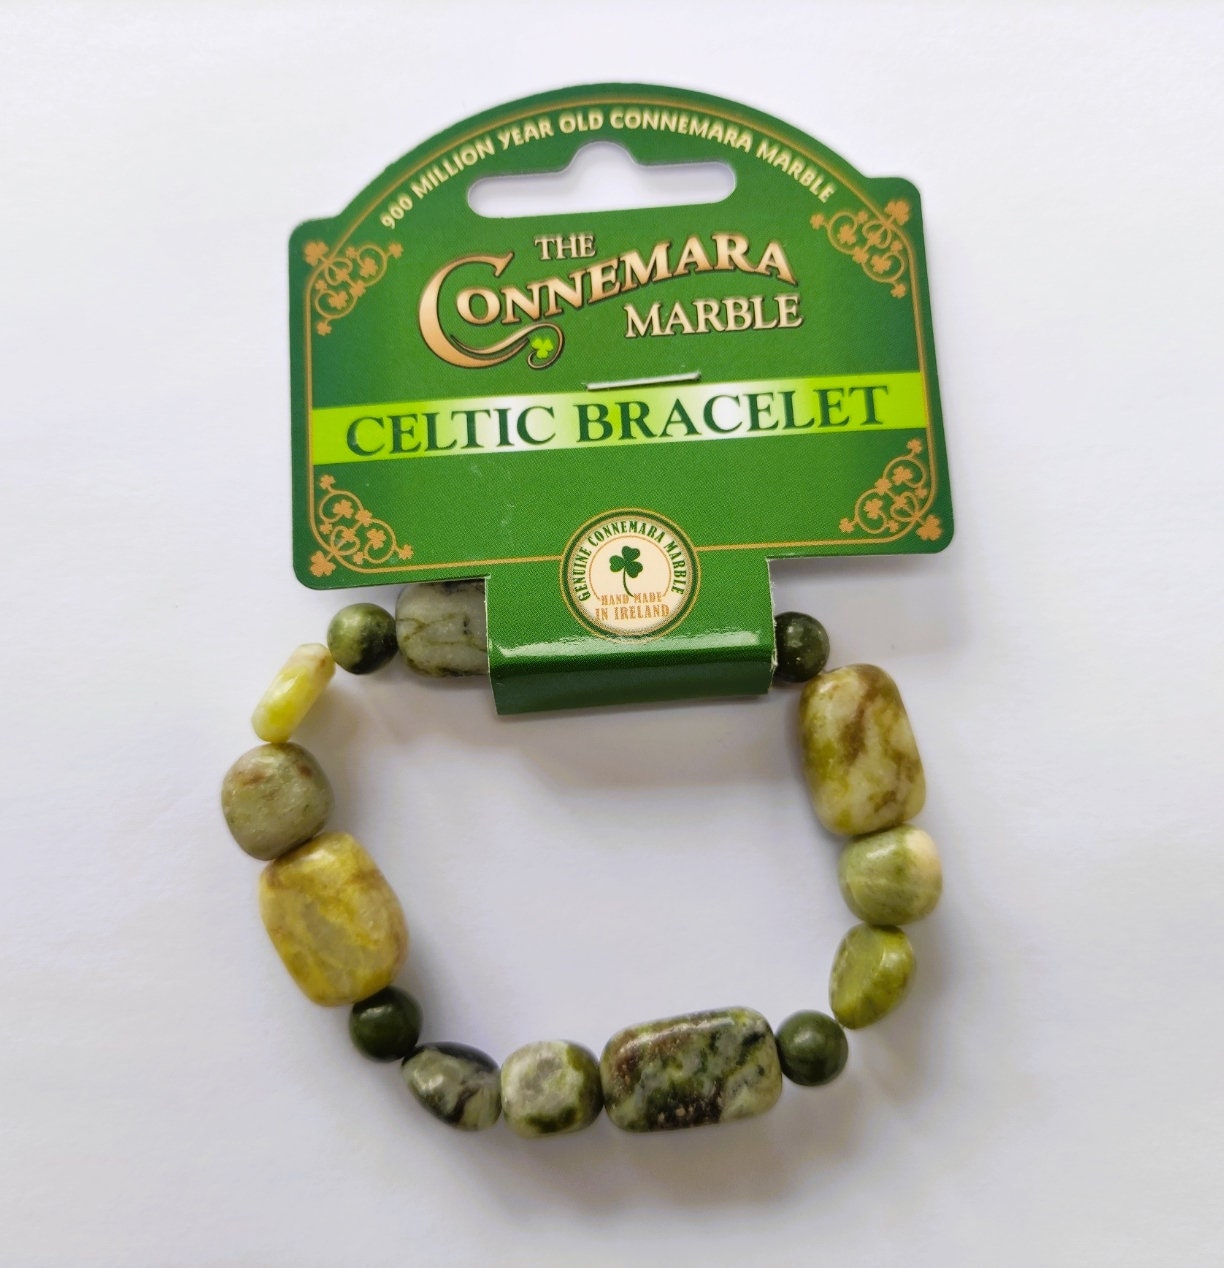 Connemara Marble Round Bead Bracelet